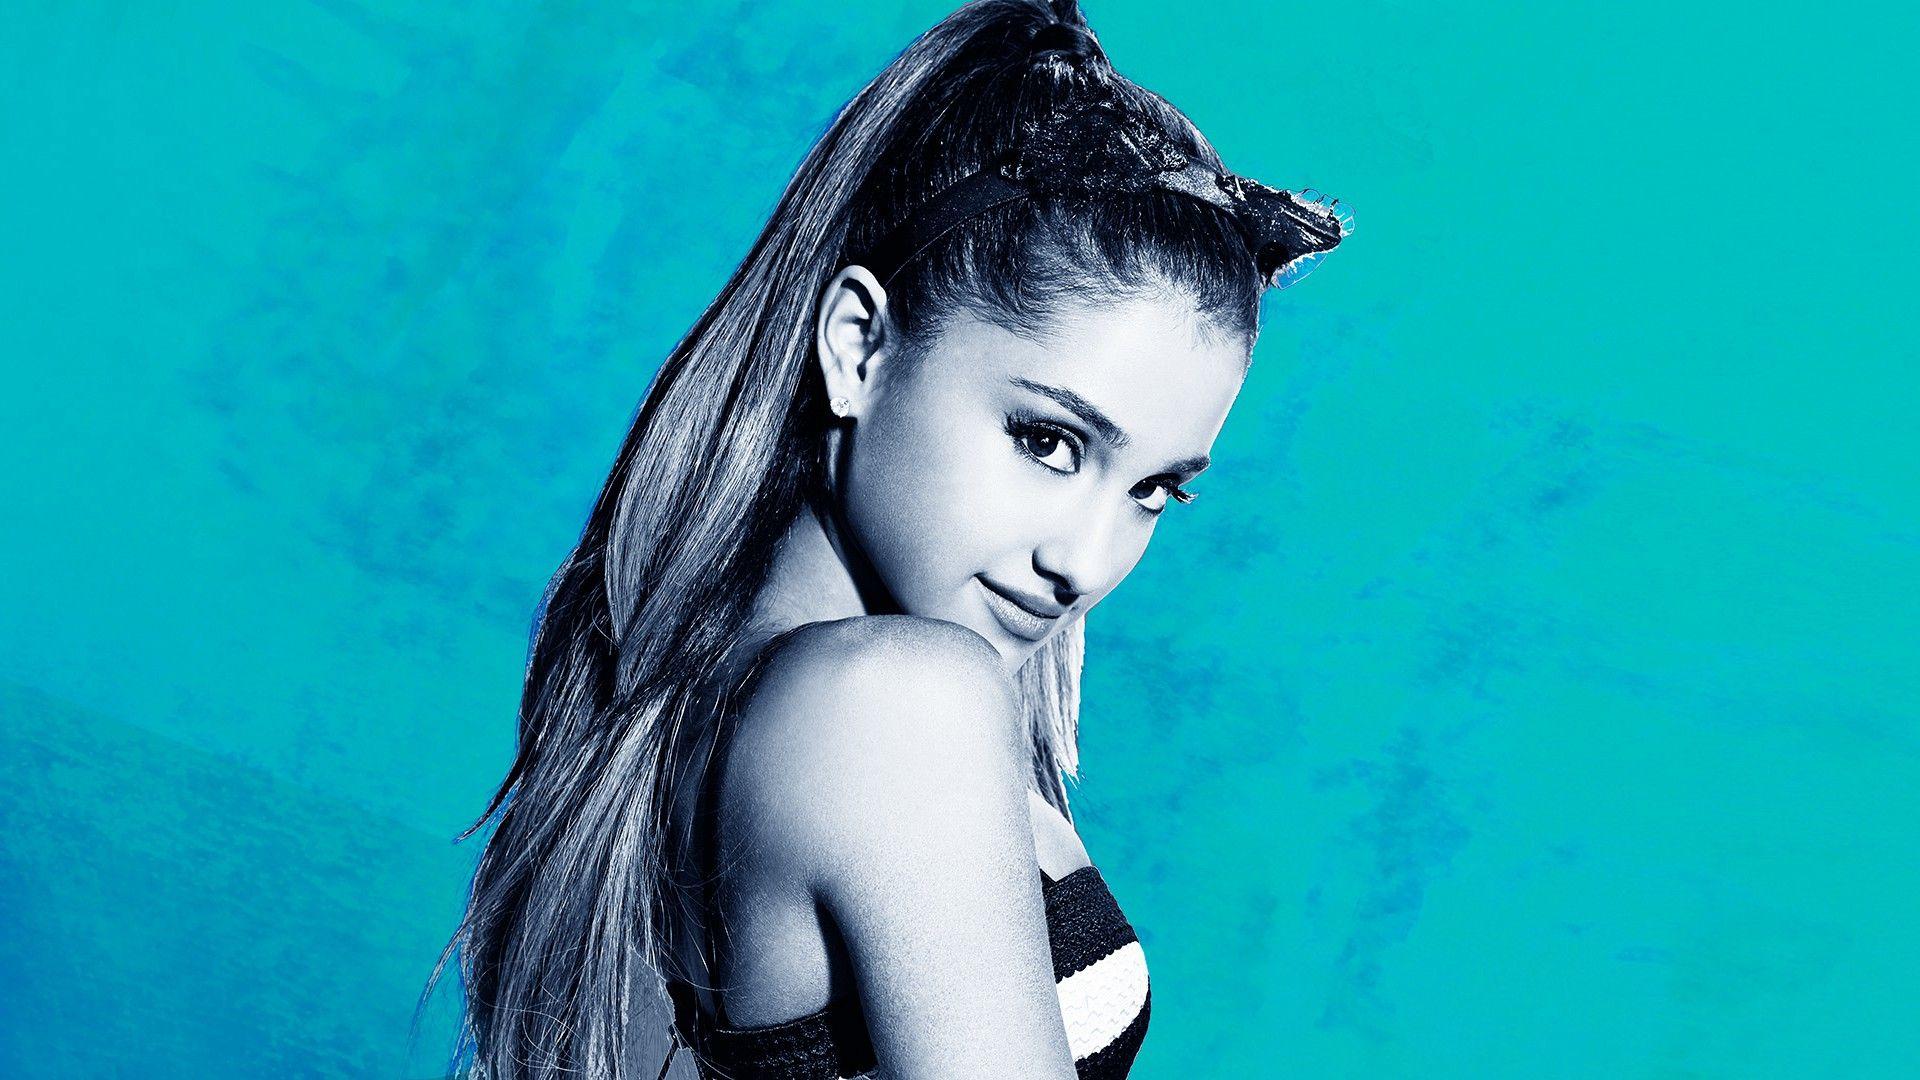 Ariana Grande HD Wallpaper Download for Desktop, 1080p, 4K, Wide